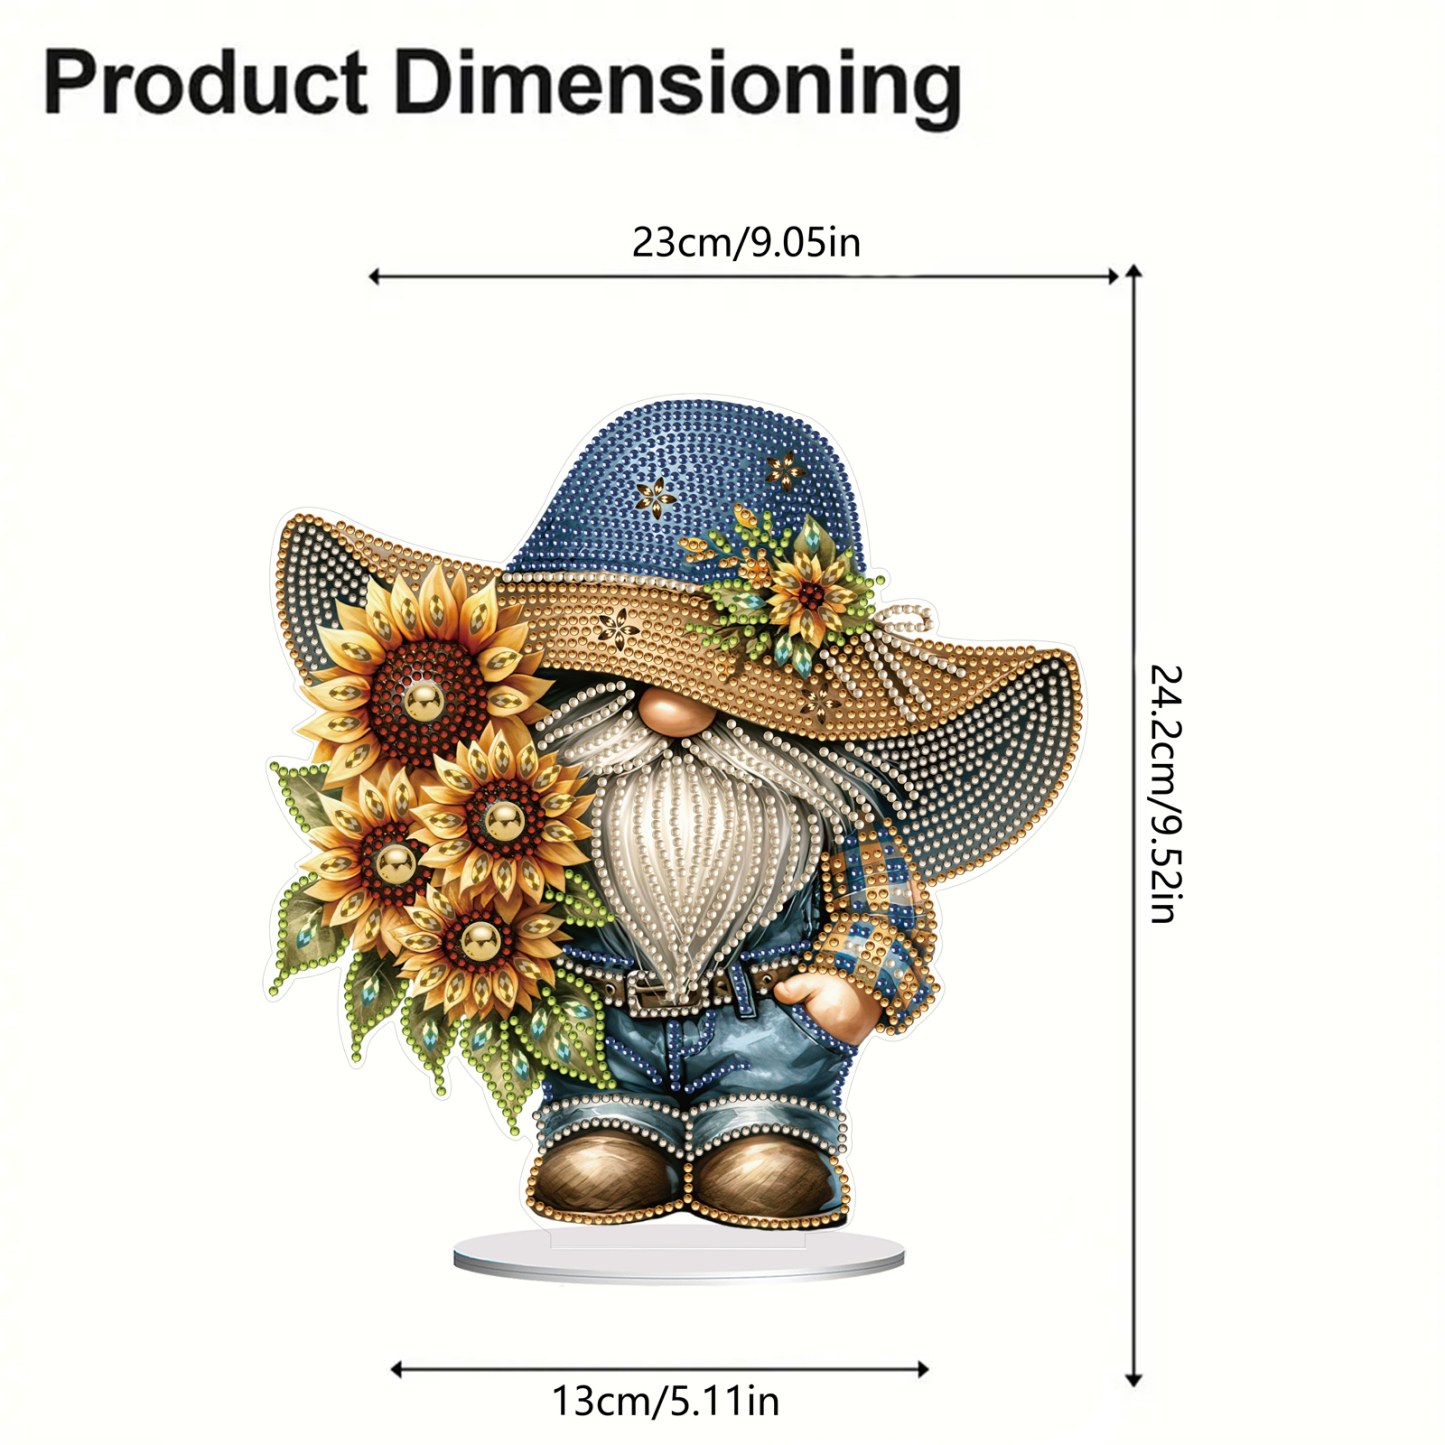 5D DIY Special Shape Diamond Painting Desk Ornament Gnome Decor Kit